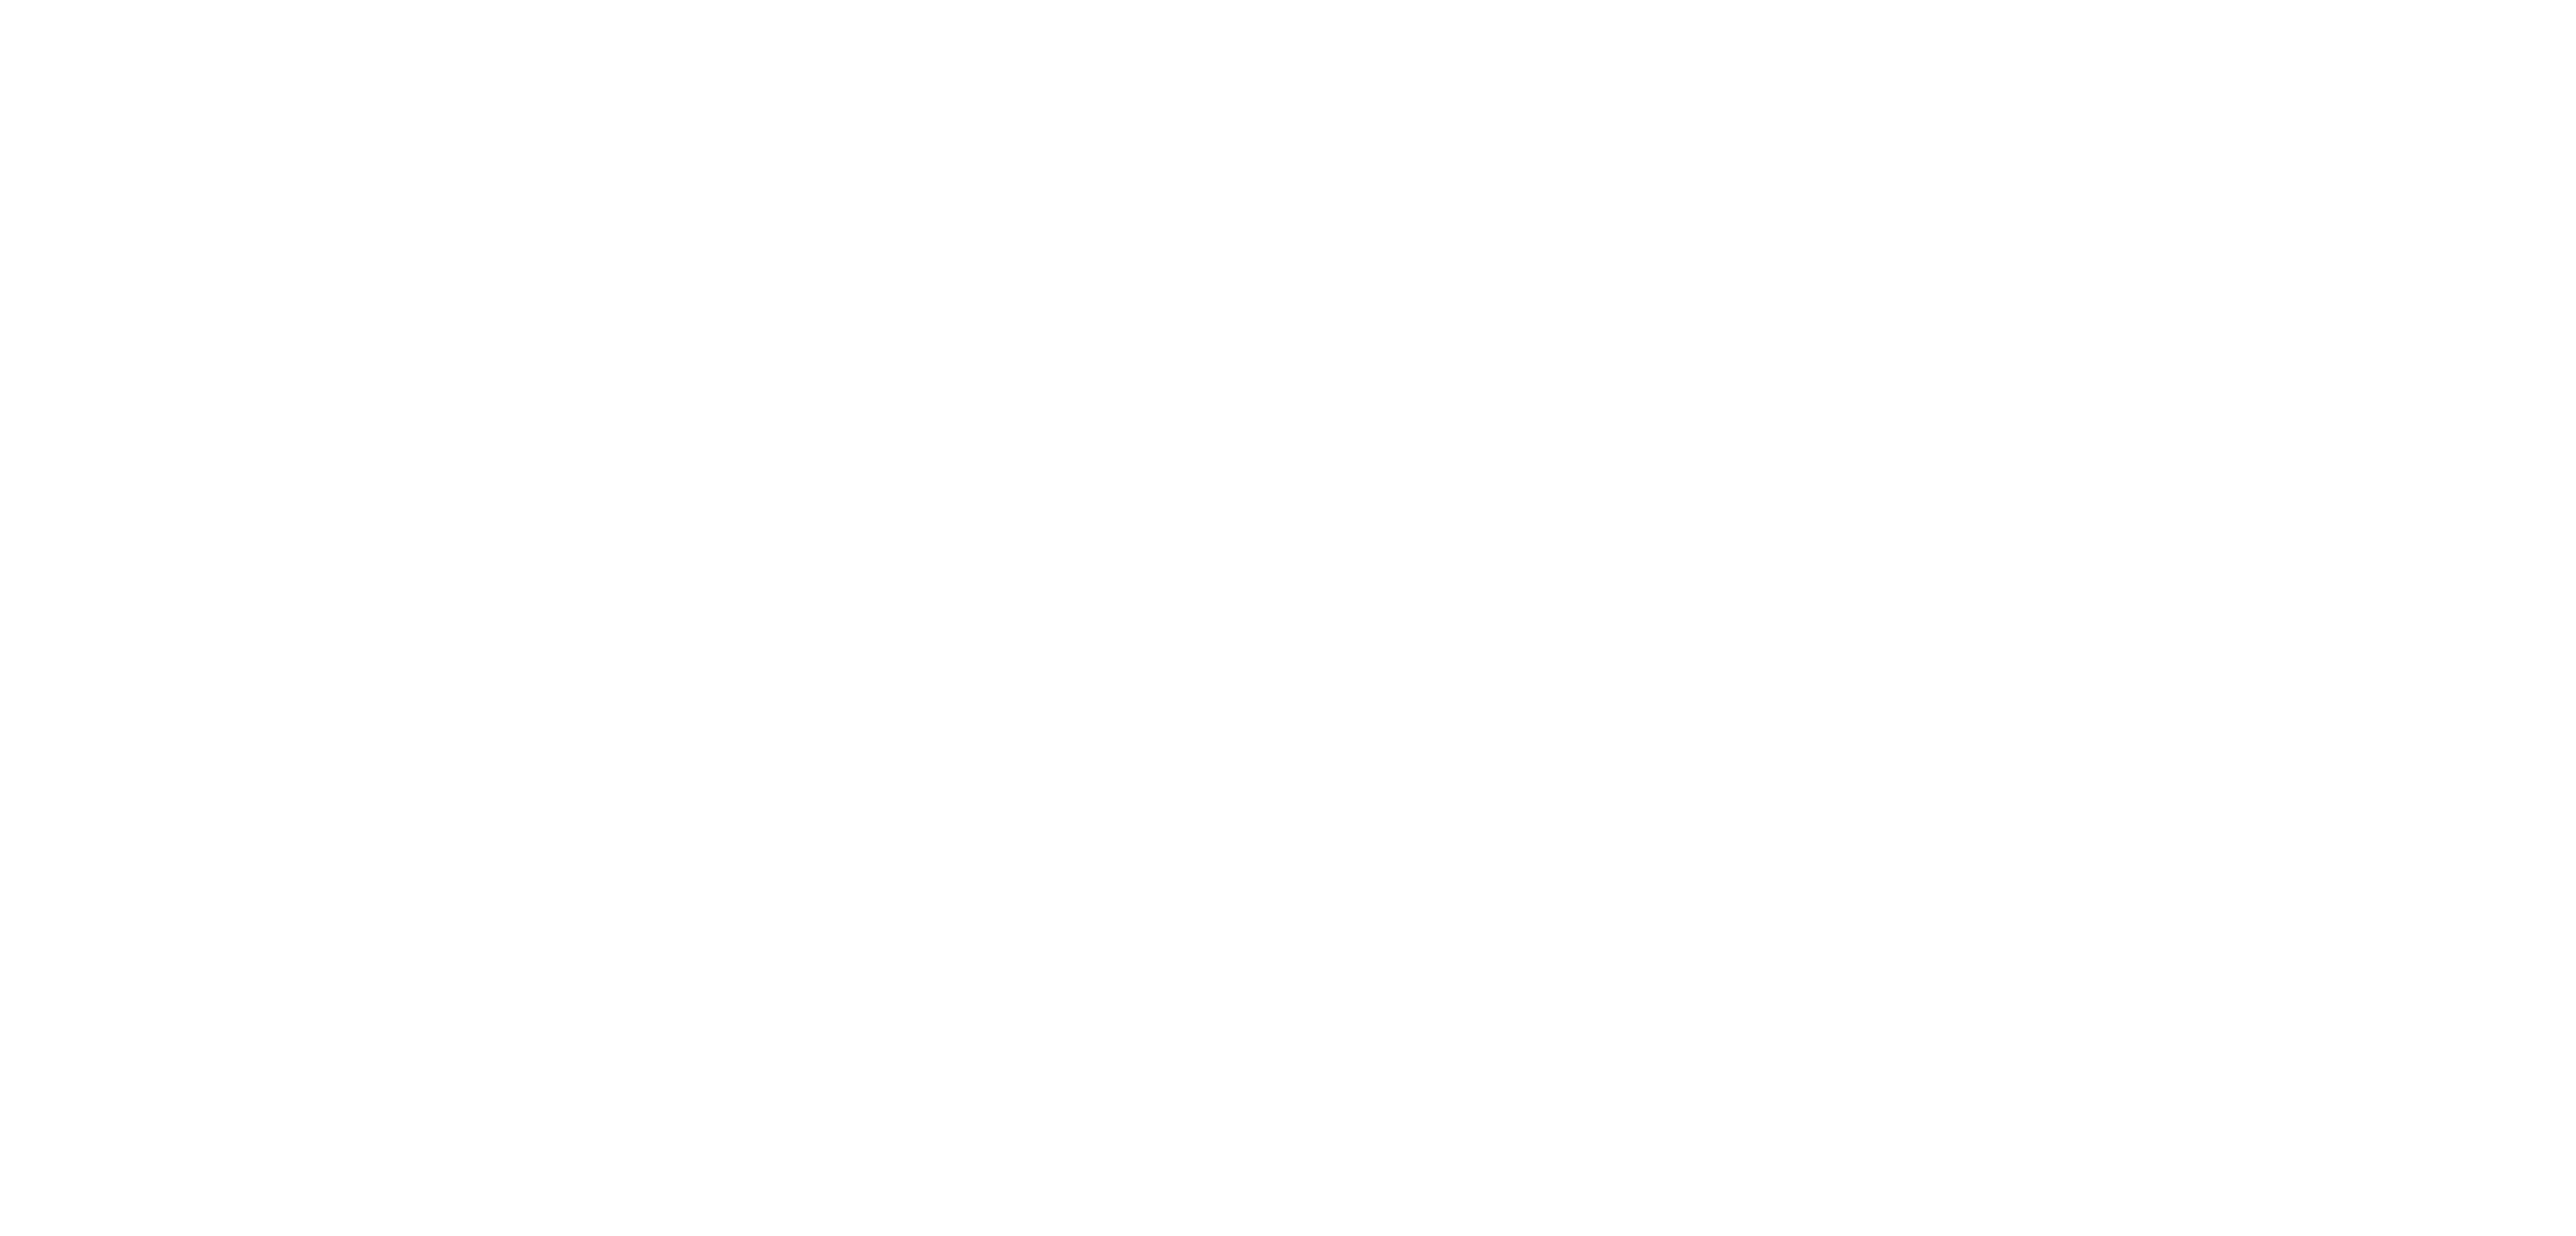 SMU Special Interest and Community Service Sodality (SICS)